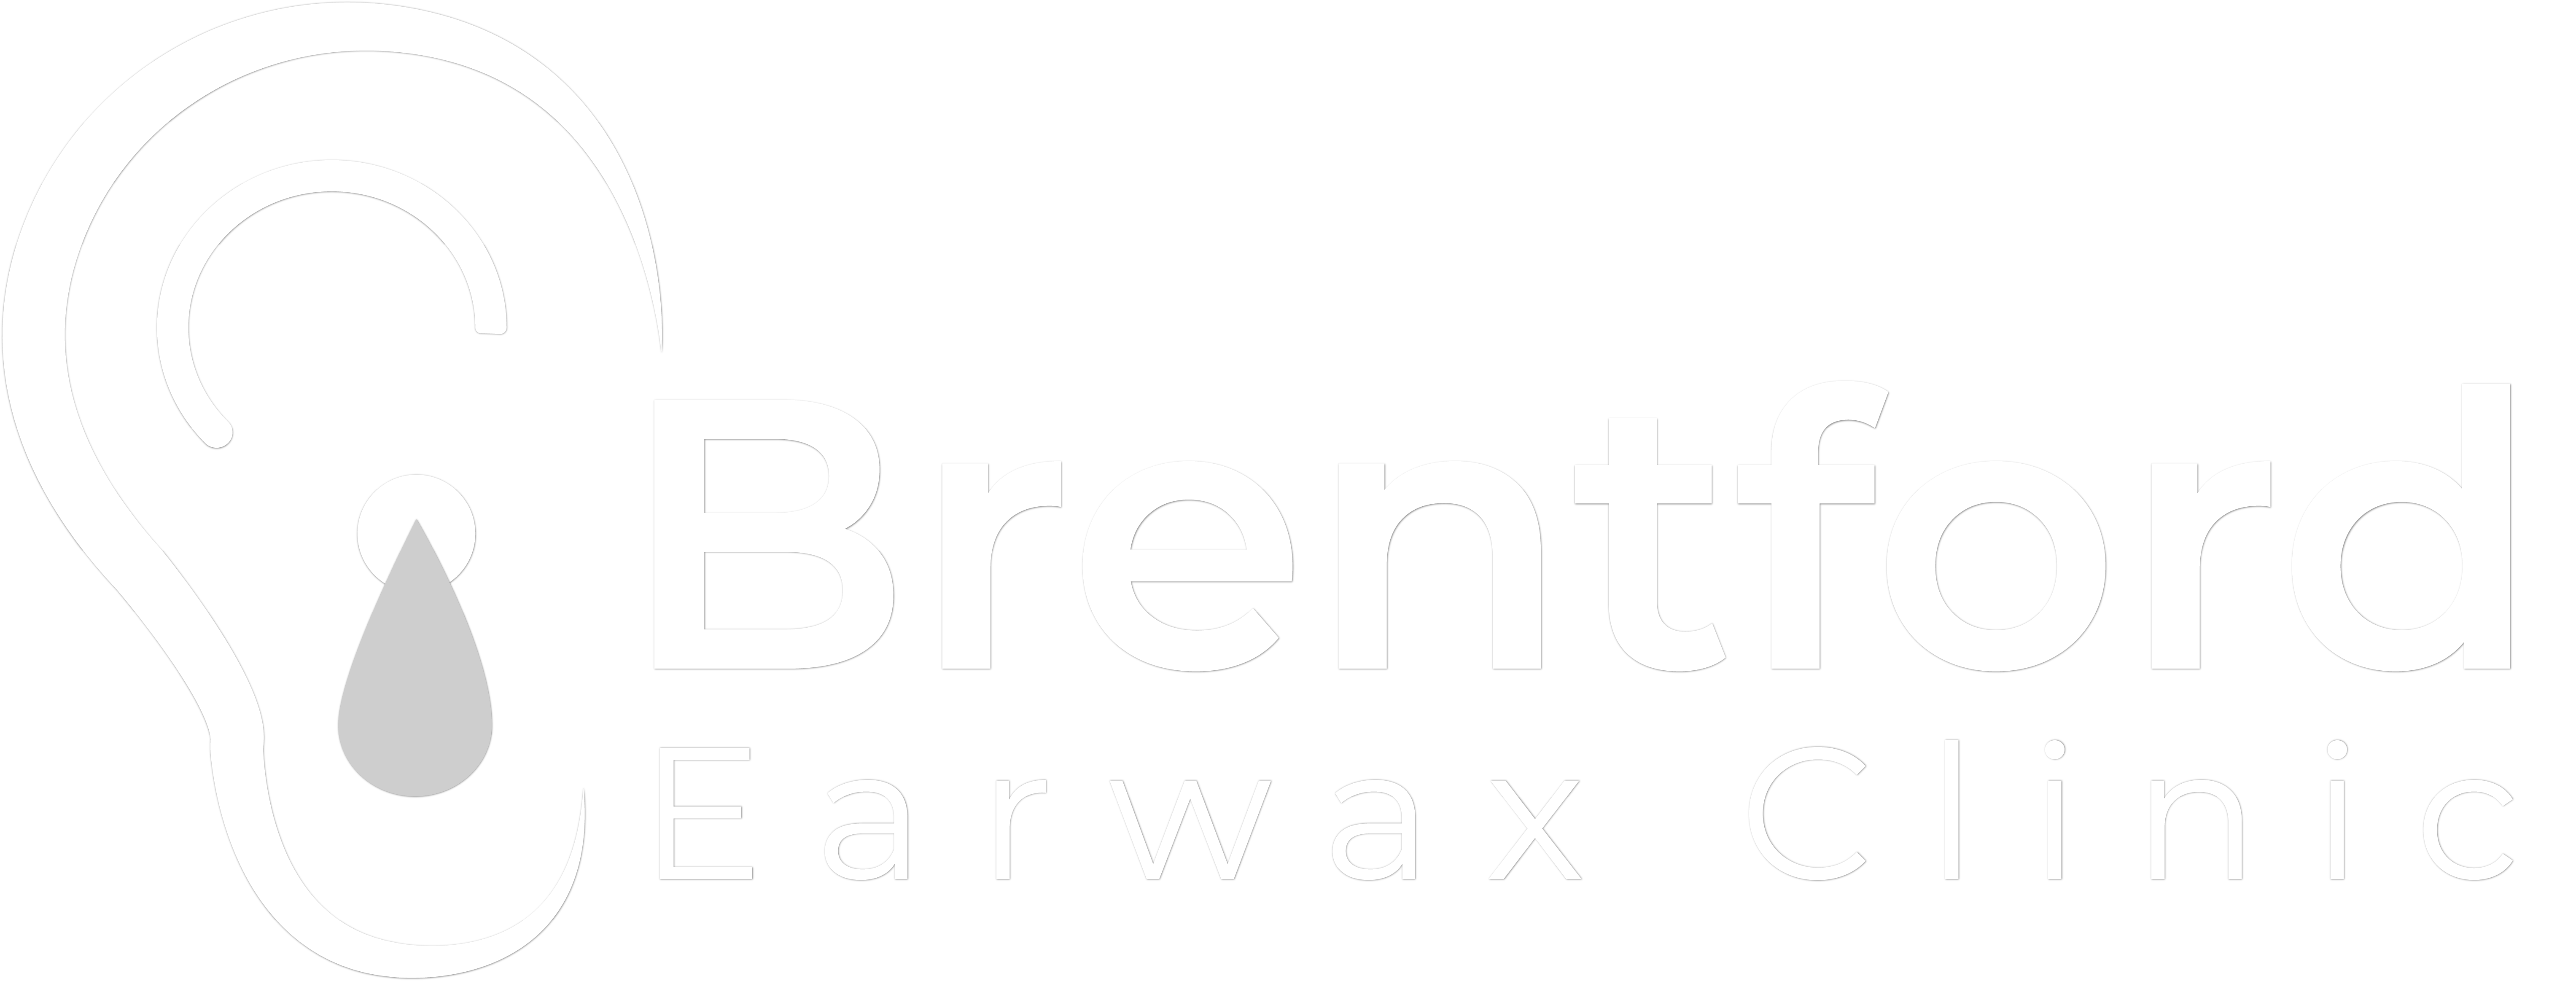 Brentford earwax clinic